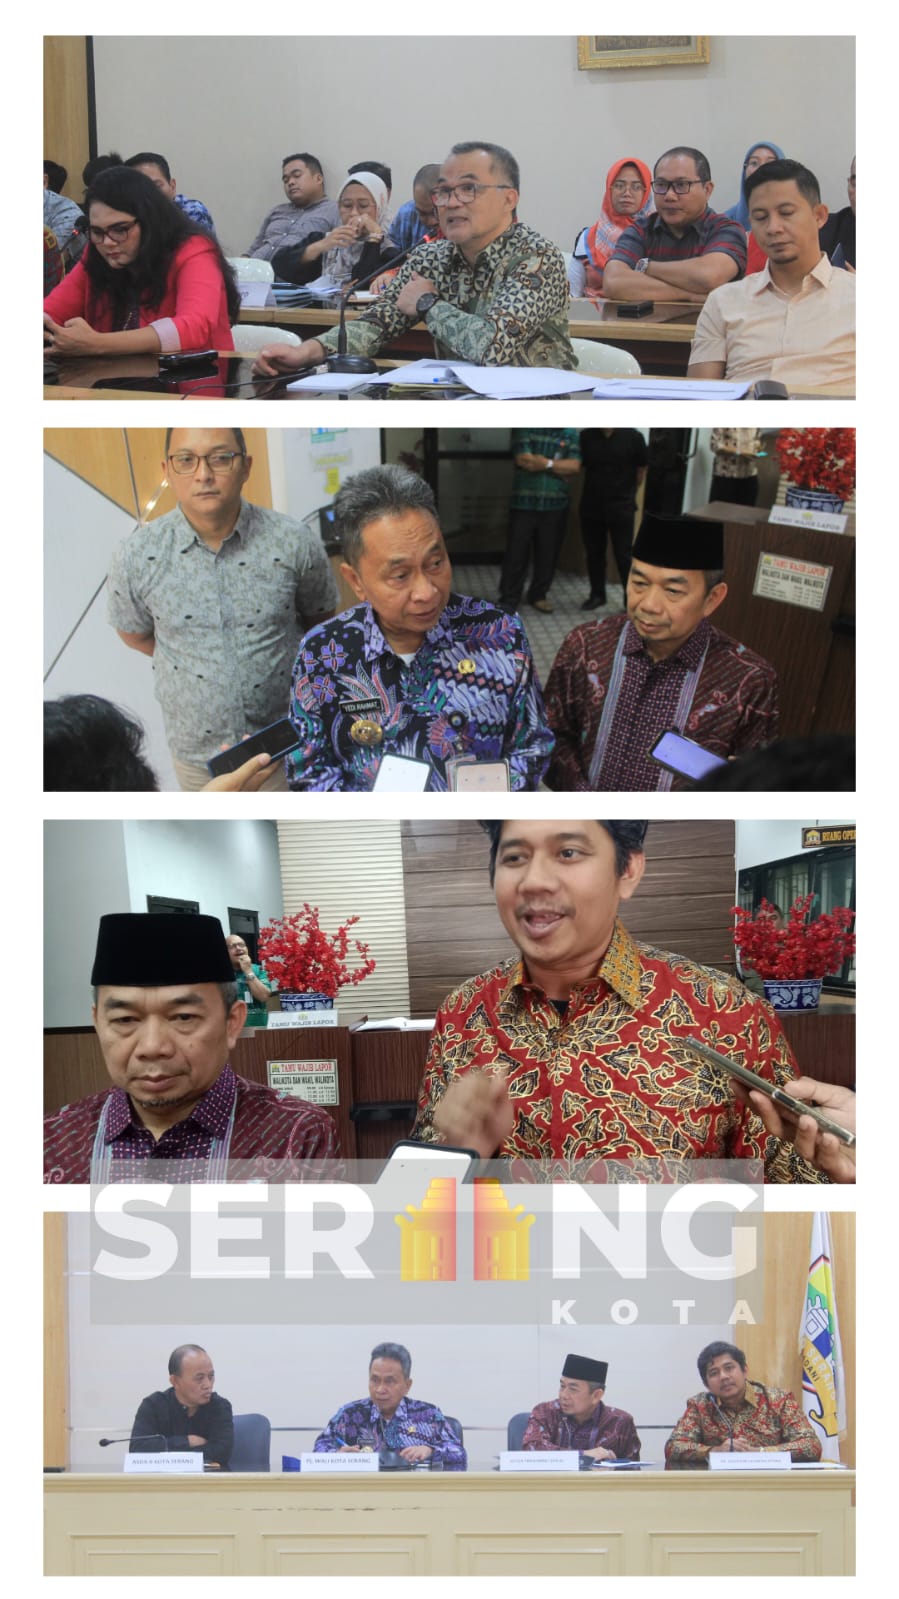 Percepatan Pembangunan Smart City di Kota Serang, Pj Wali Kota Serang mohon support Komisi I DPR RI dan Kementerian Kominfo RI